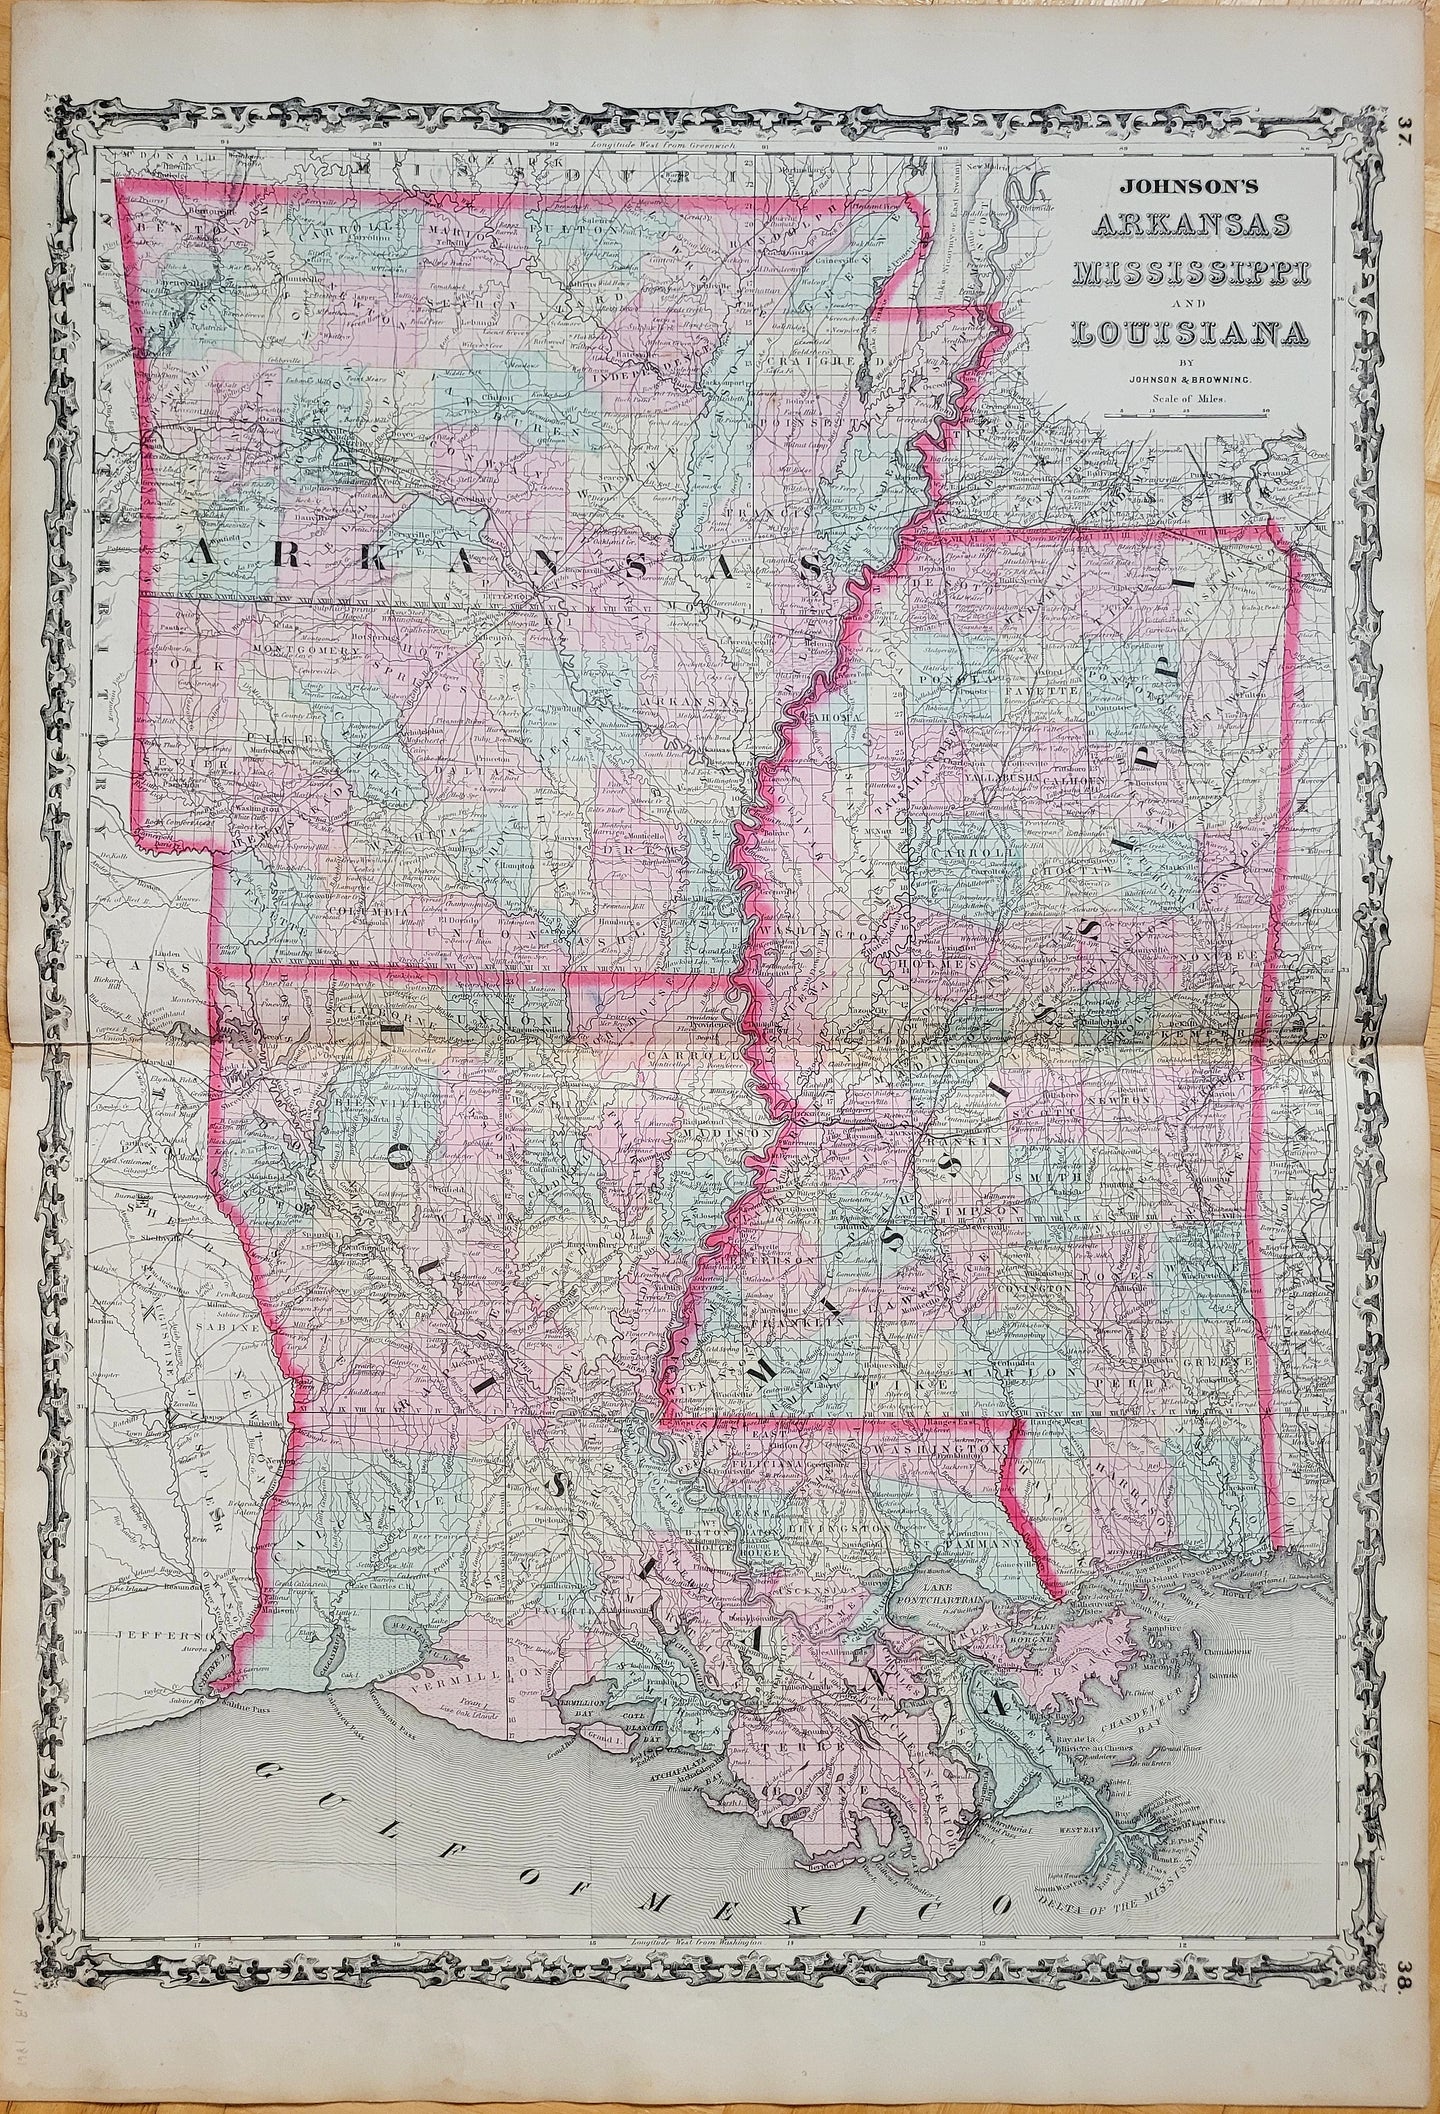 Maps-Antiquity-Antique-Map-United-States-Johnson-Ward-1861-1860s-1800s-19th-Century-Johnson's-Arkansas-Mississippi-Louisiana-Mississippi-River-Delta